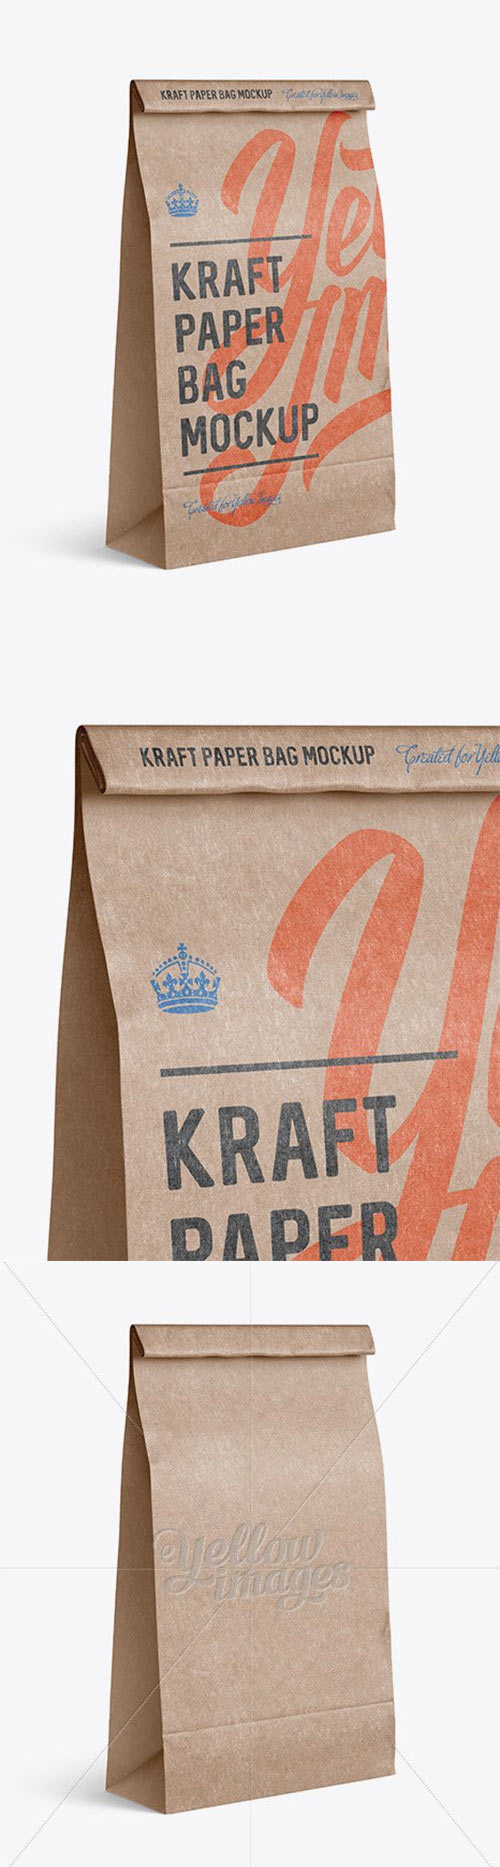 Kraft Paper Food/Snack Bag Mockup